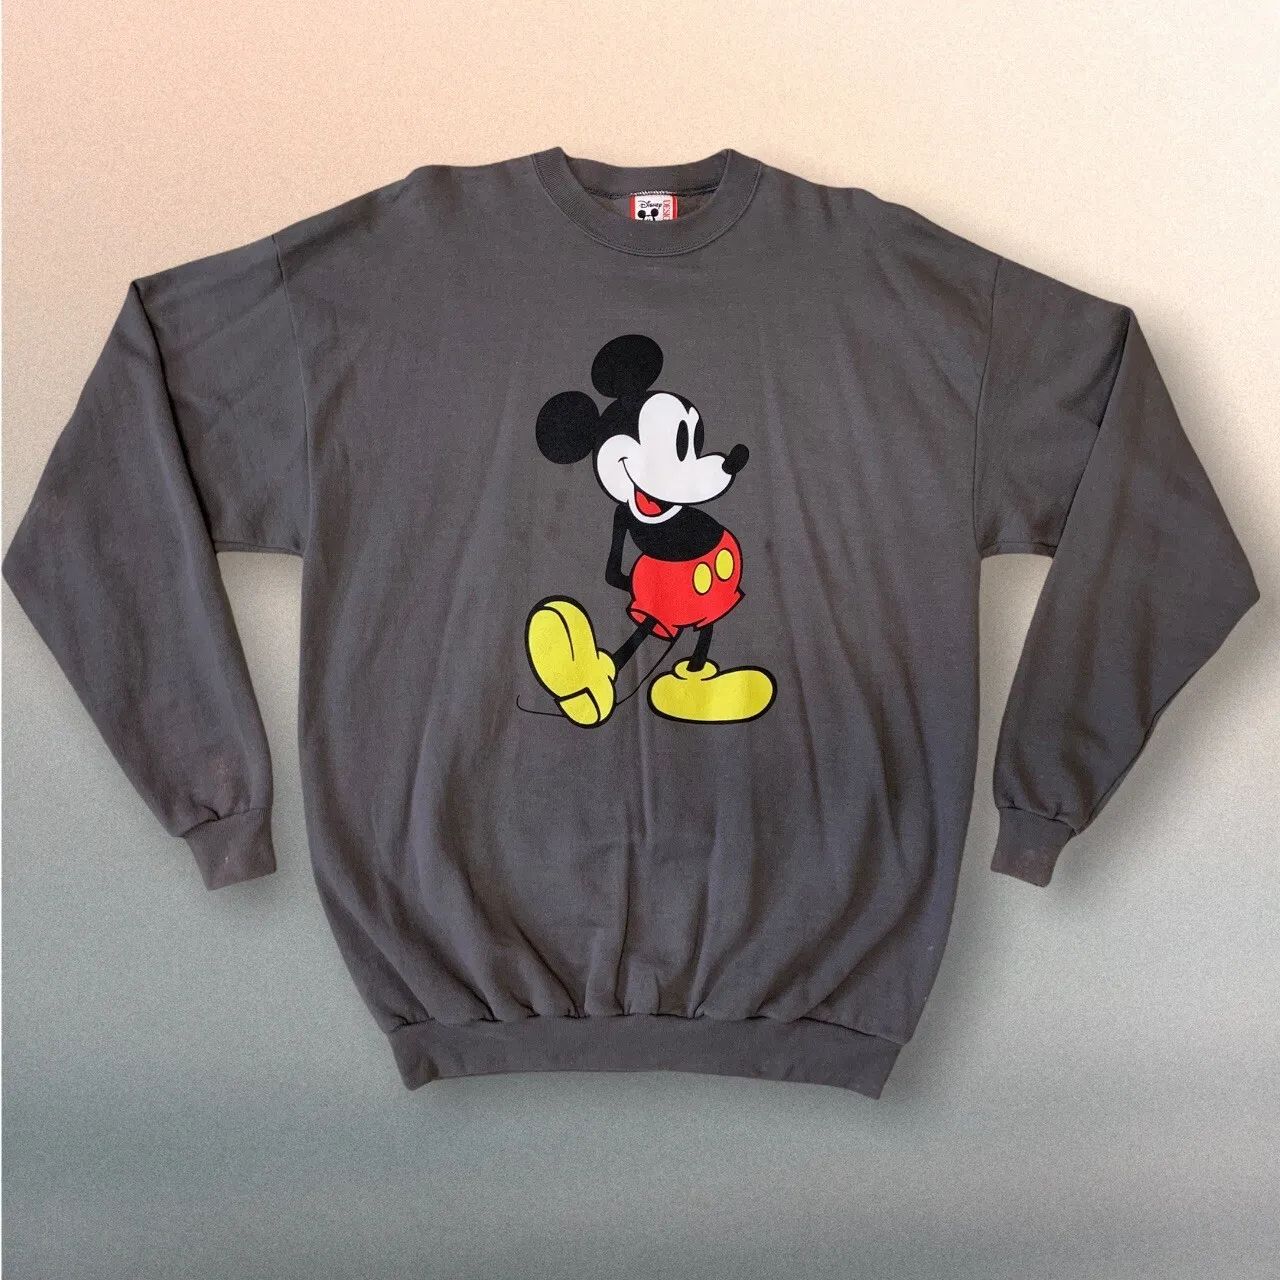 Vintage Disney Classic Mickey Mouse Graphic Sweatshirt 90s OSFM | eBay US